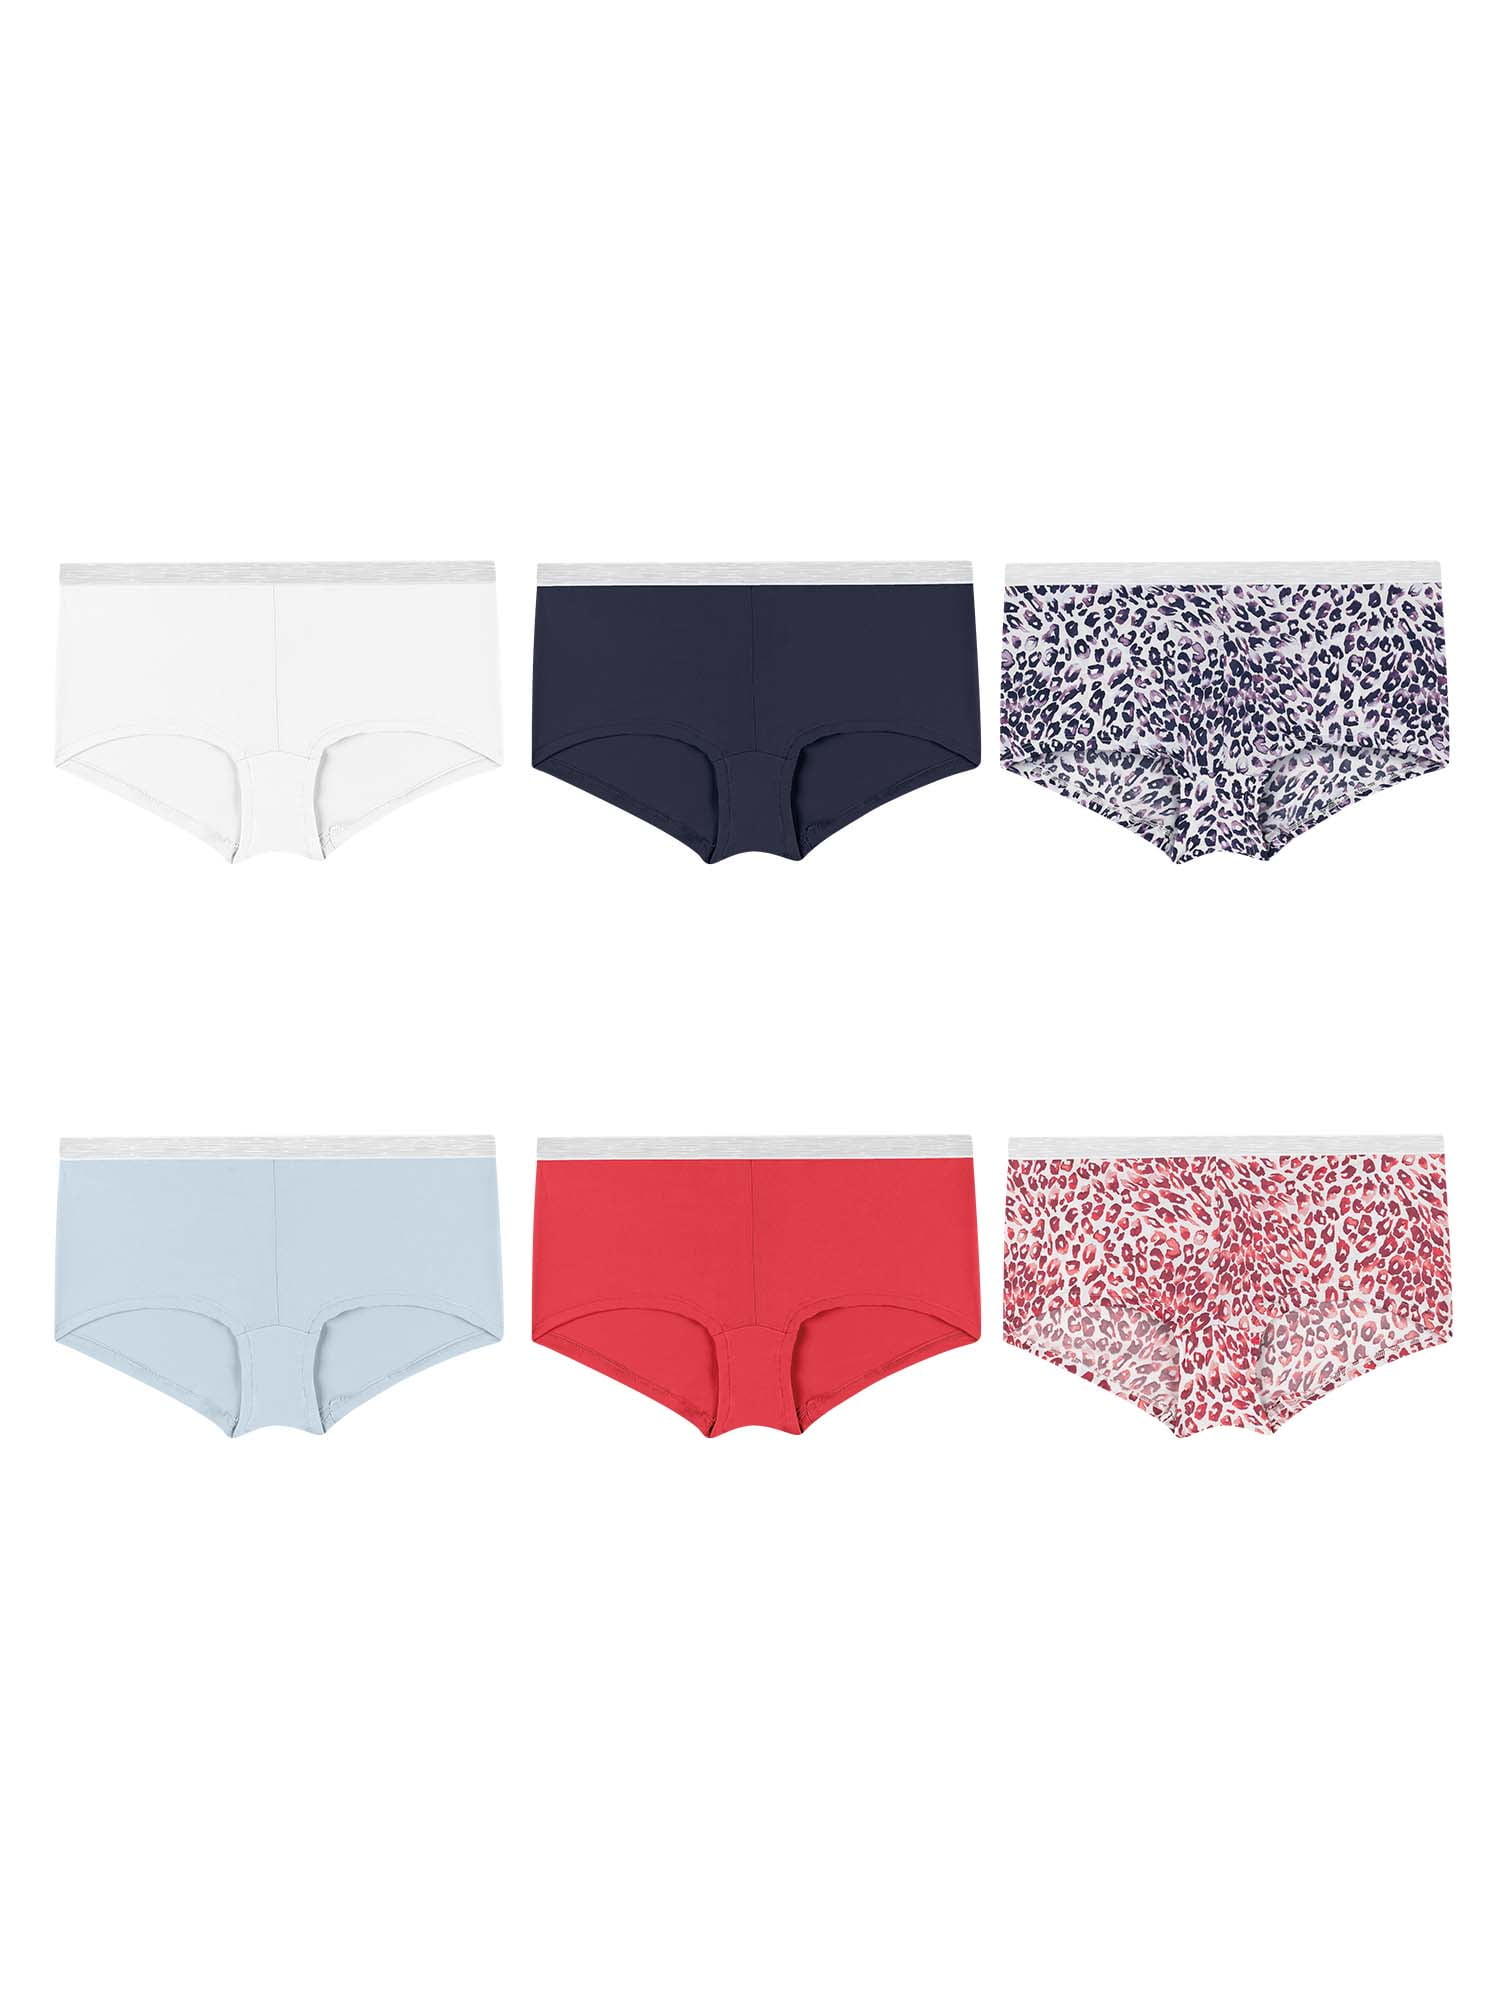 Hanes Women's Cool Comfort Microfiber Panties-Boyshorts, Briefs, Or Hipster  Fit Available, Boyshort - 6 Pack - Assorted, 6 price in UAE,  UAE